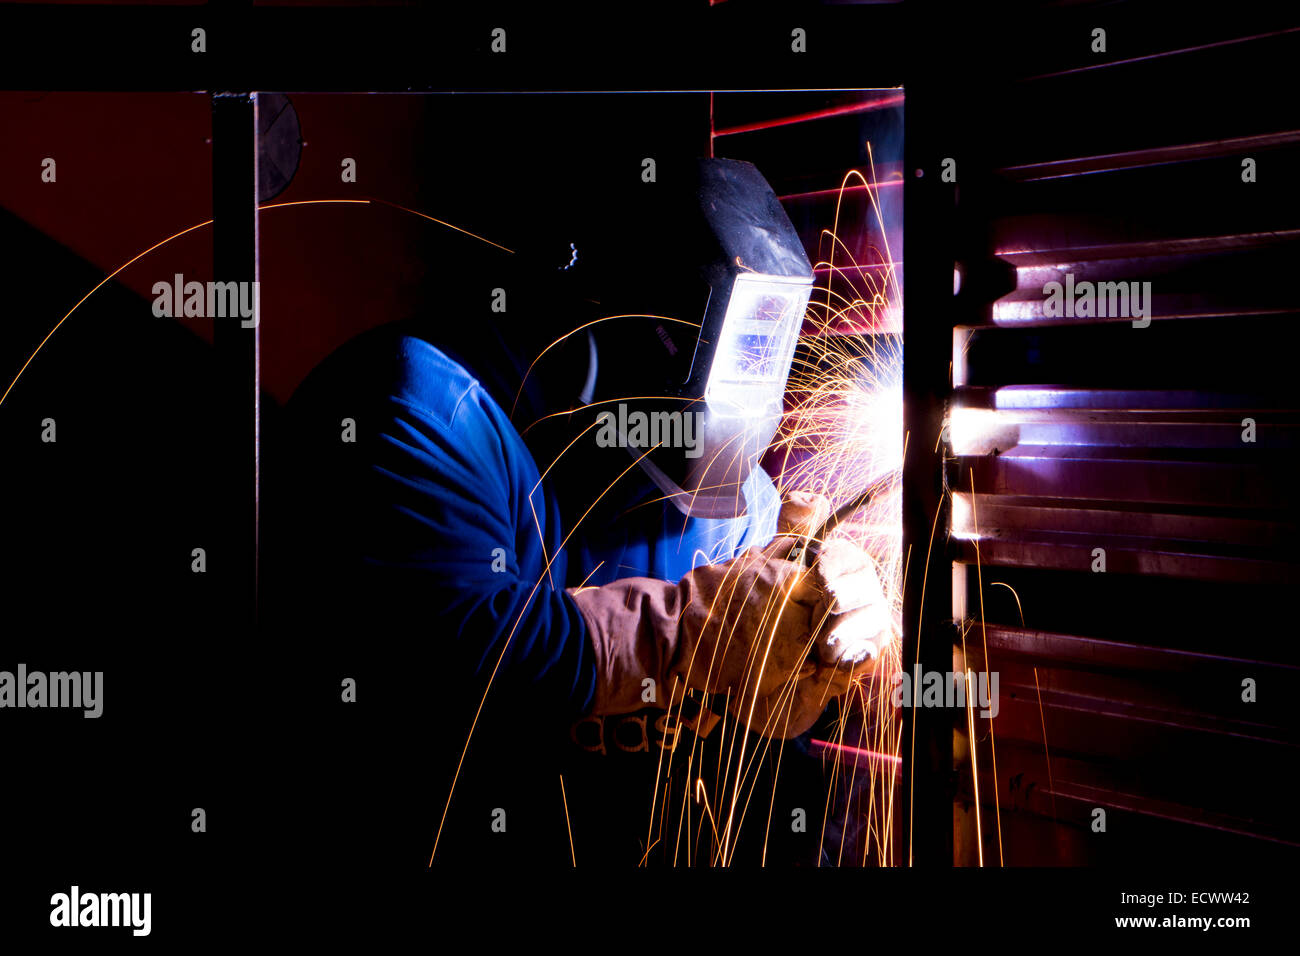 Man welding in horse trailer Stock Photo